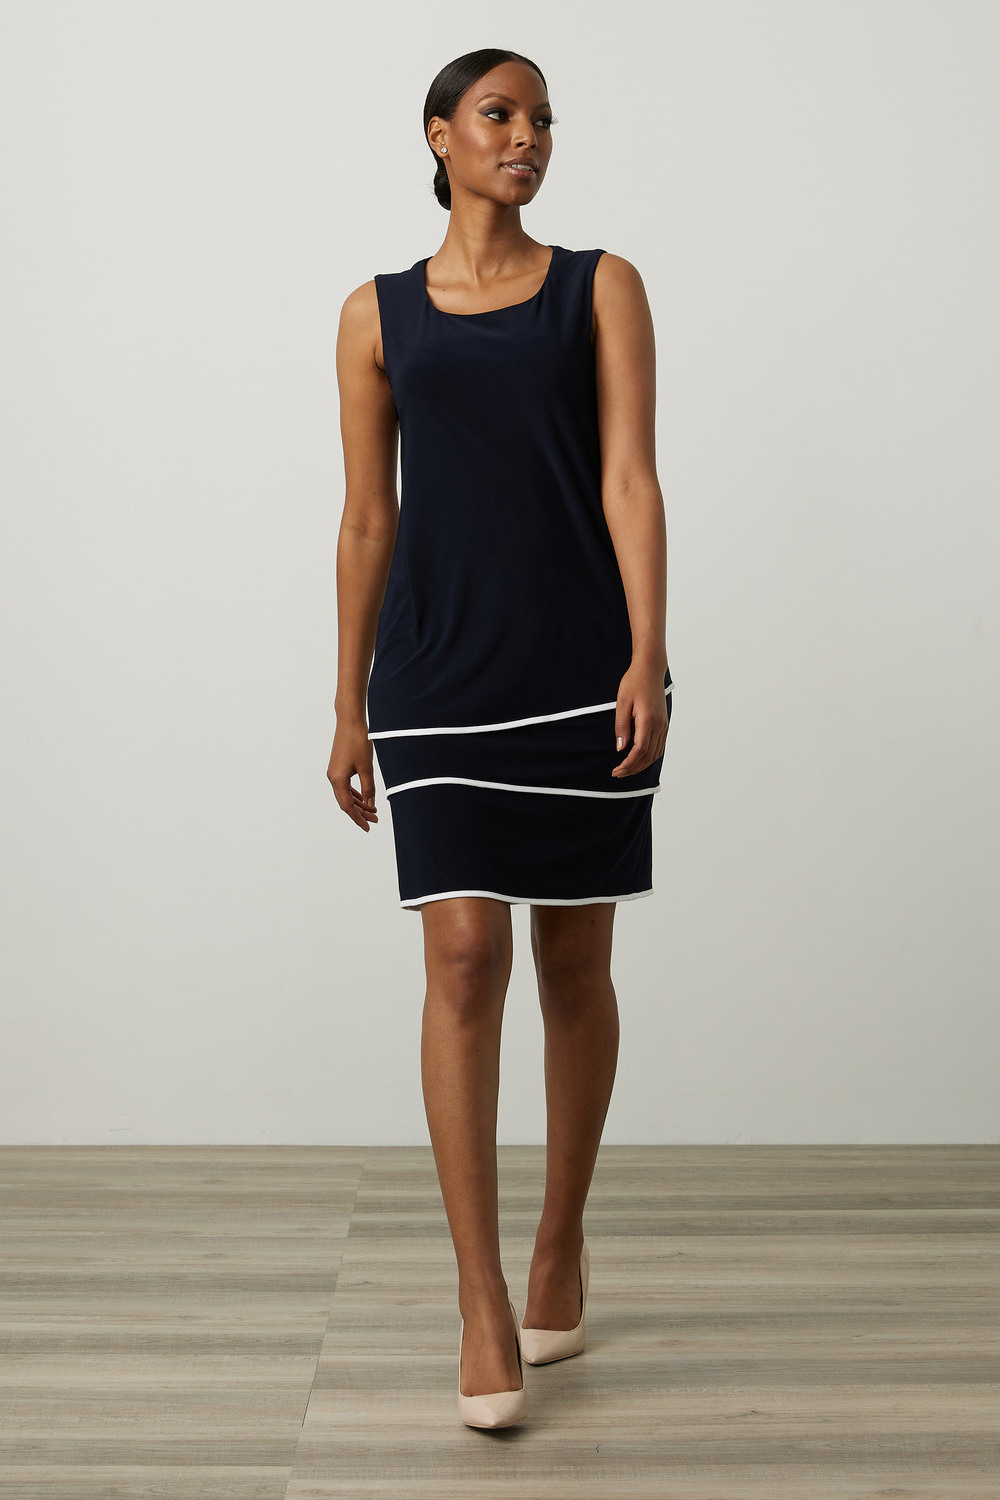 Joseph Ribkoff Tiered Dress Style 213427. Midnight Blue/vanilla